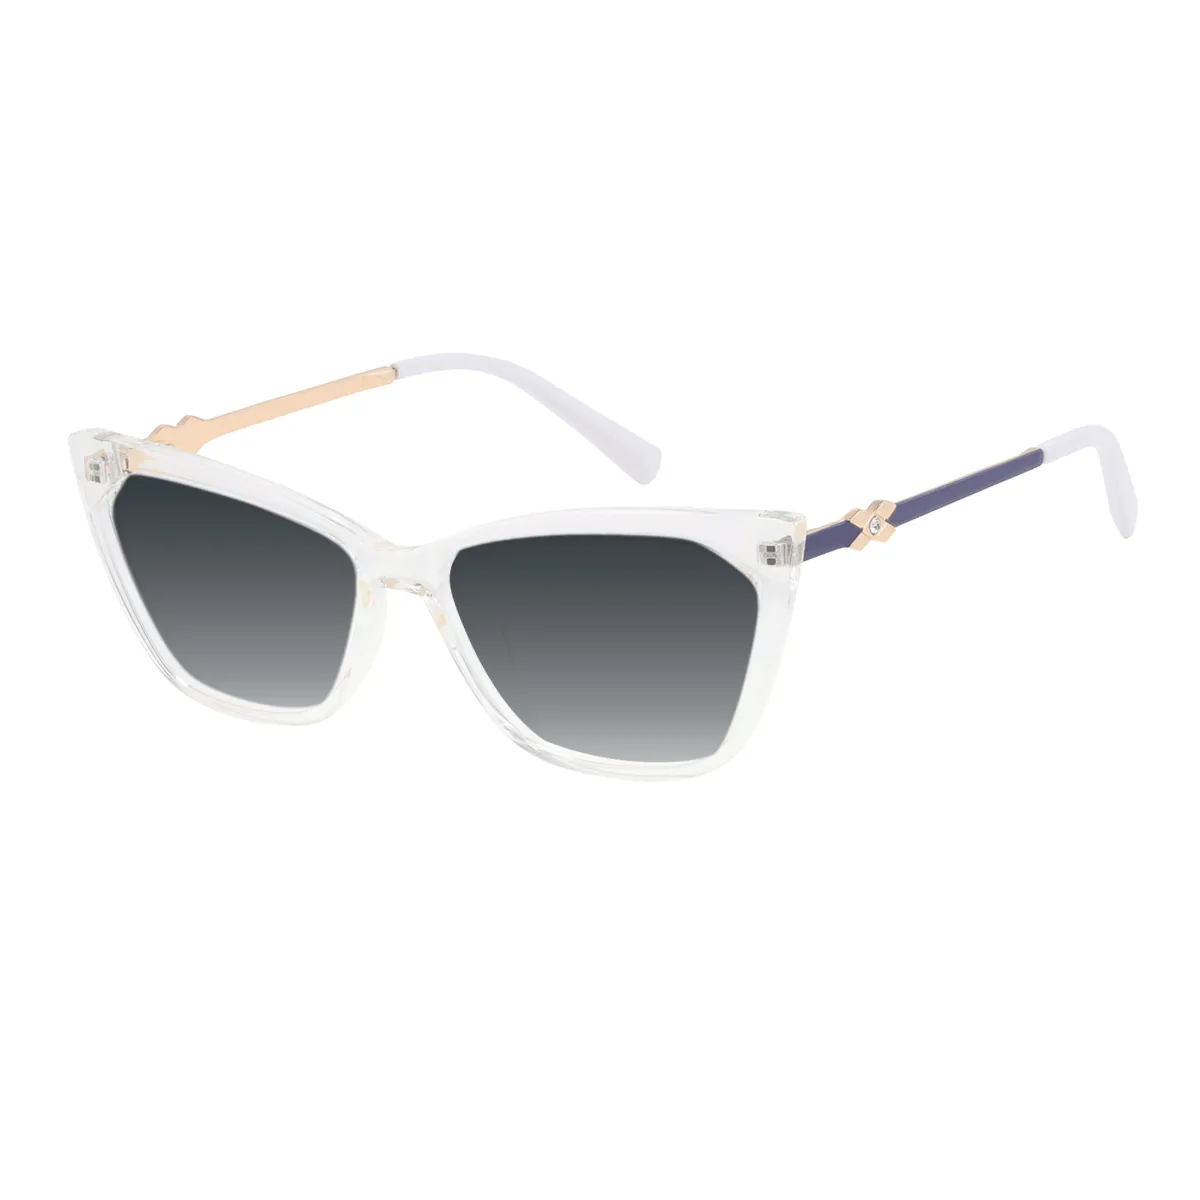 Cindy - Cat-eye Translucent Sunglasses for Women